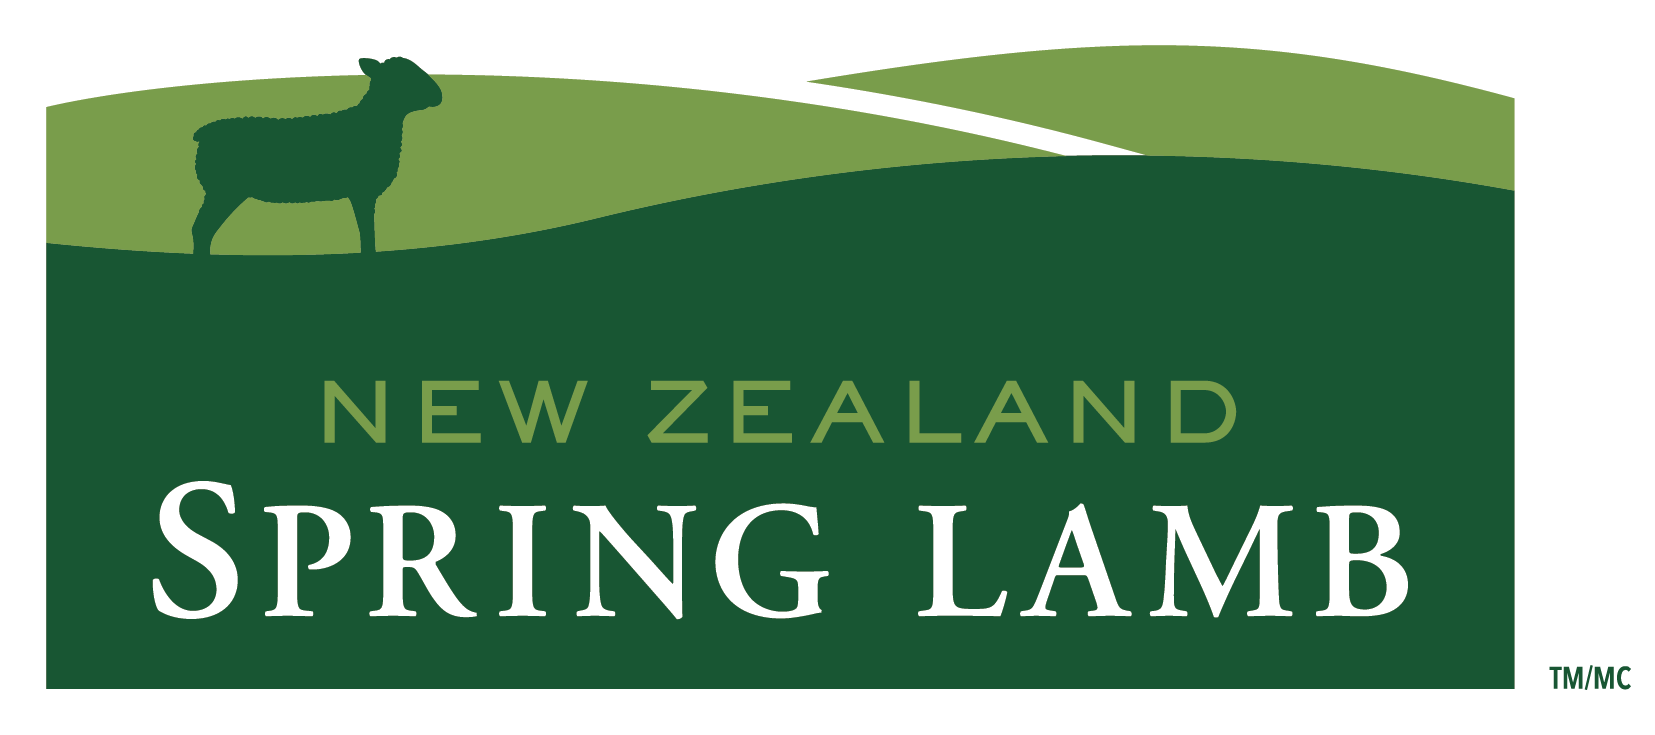 New Zealand Spring Lamb